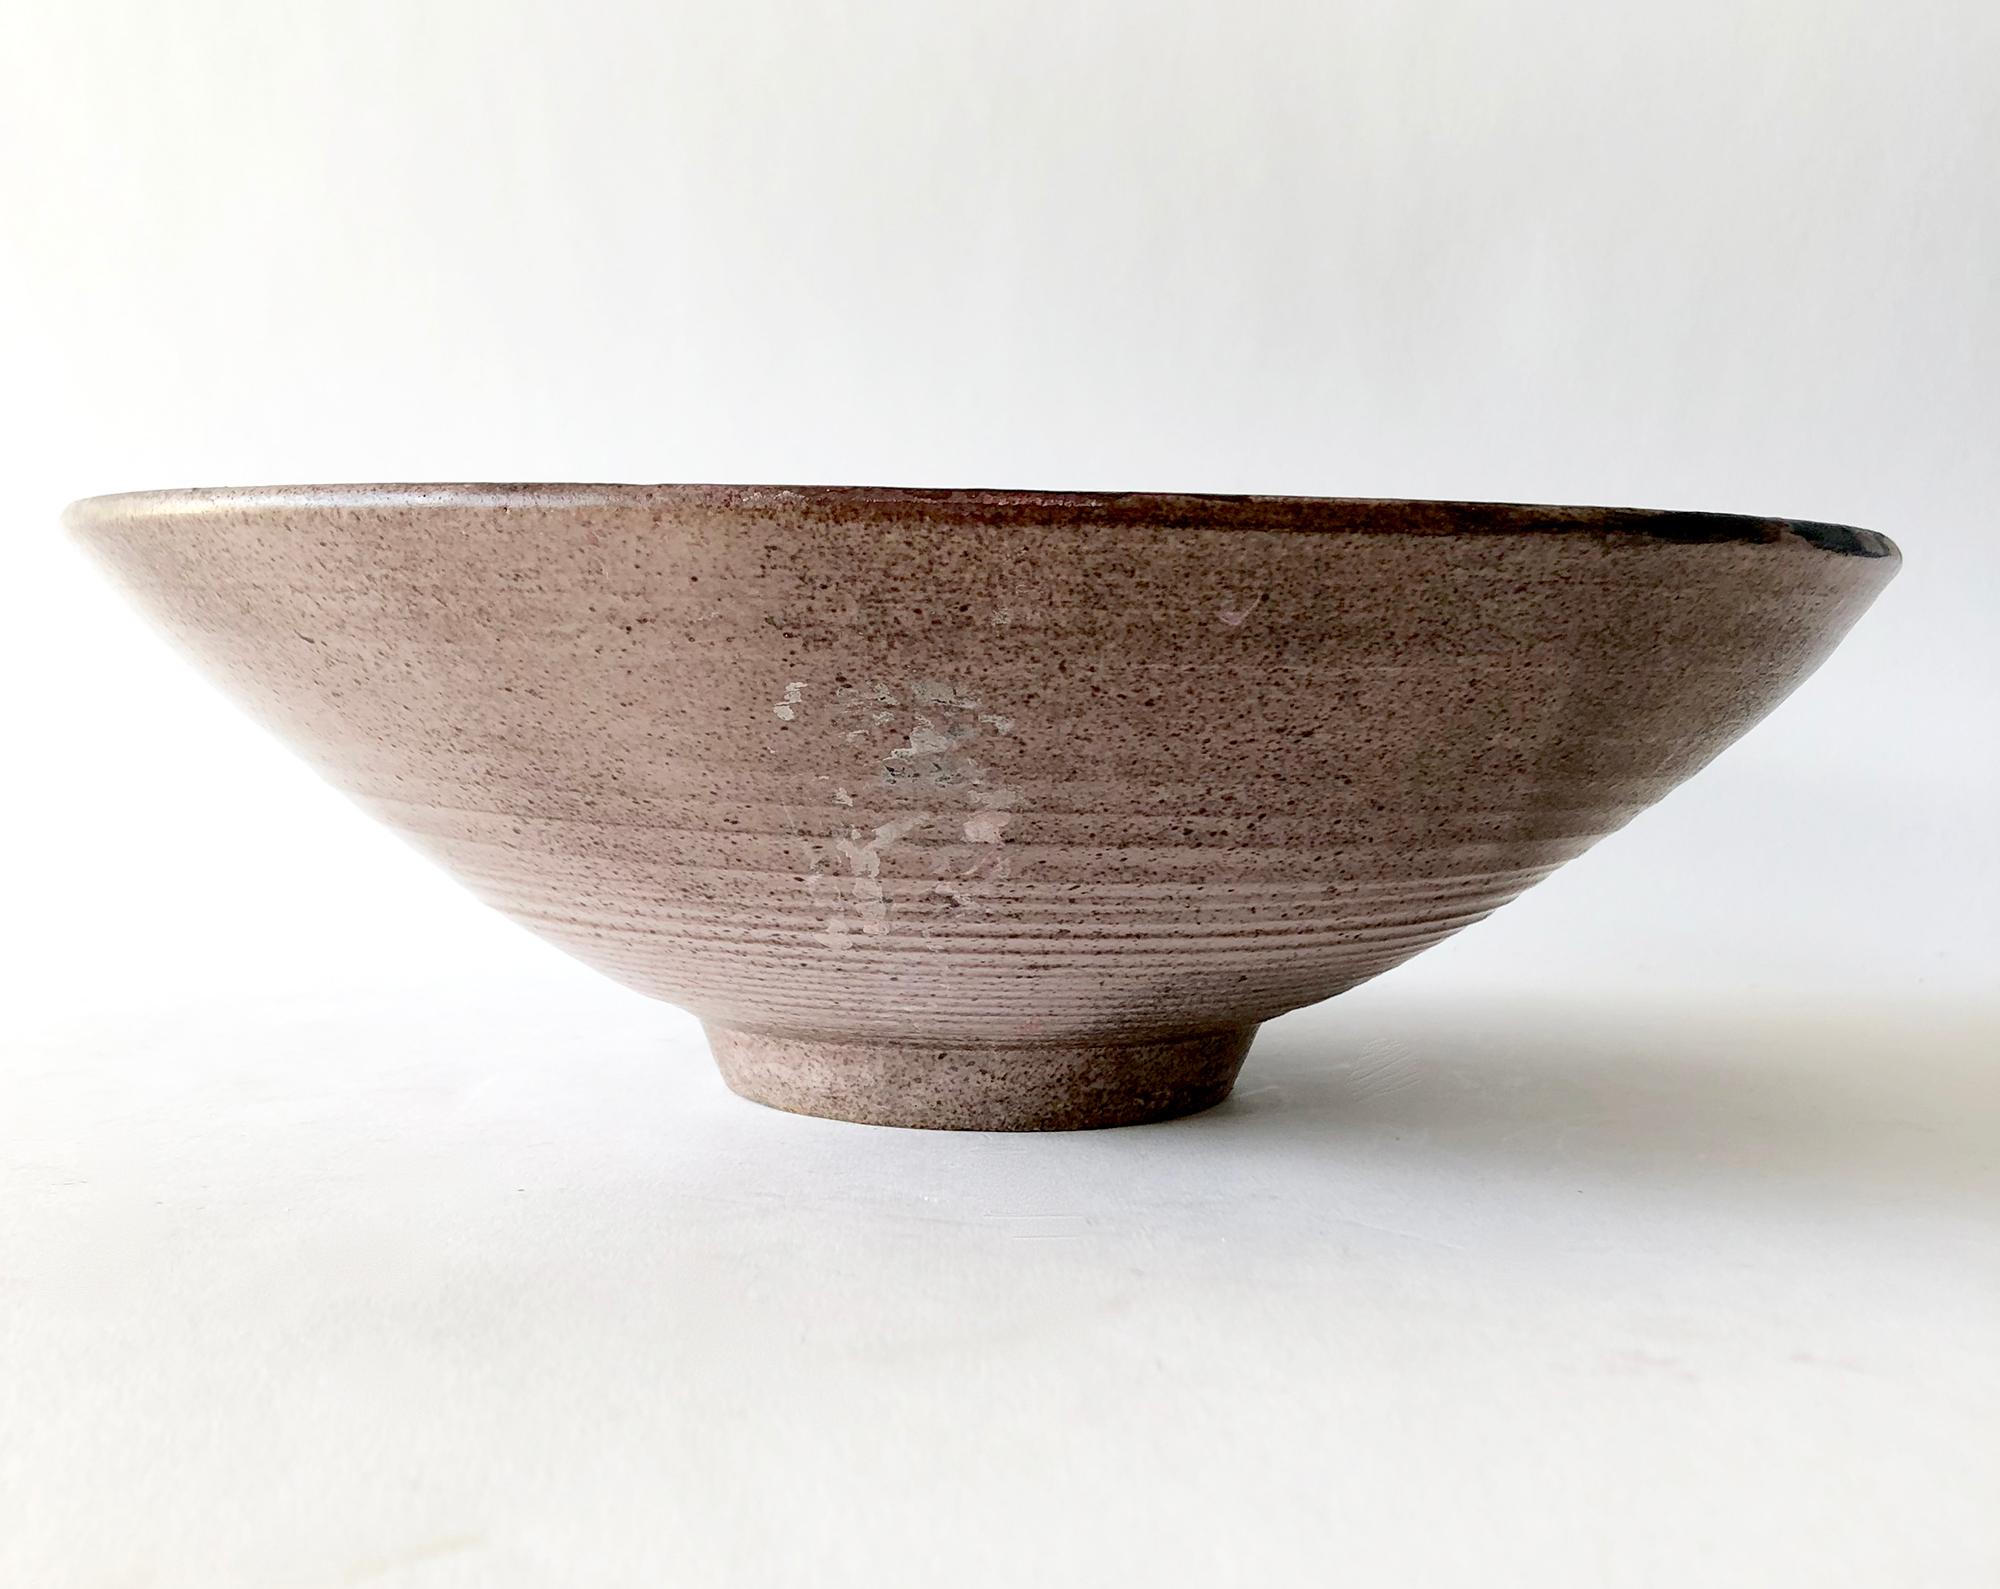 Large Laura Anderson stoneware bowl measuring 3.5